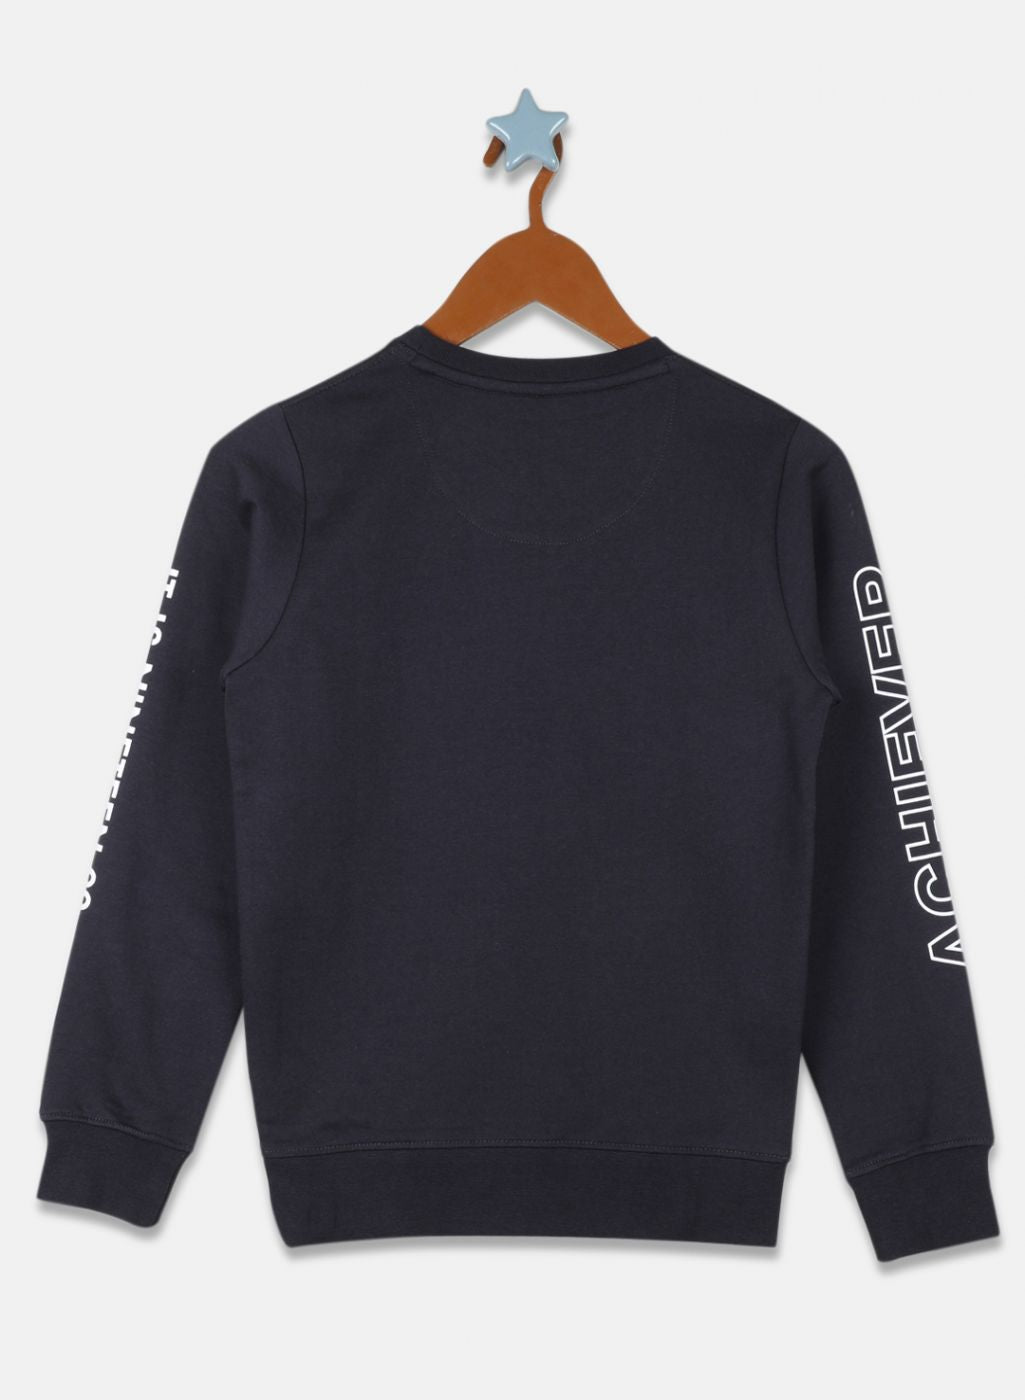 Boys Grey Printed Sweatshirt